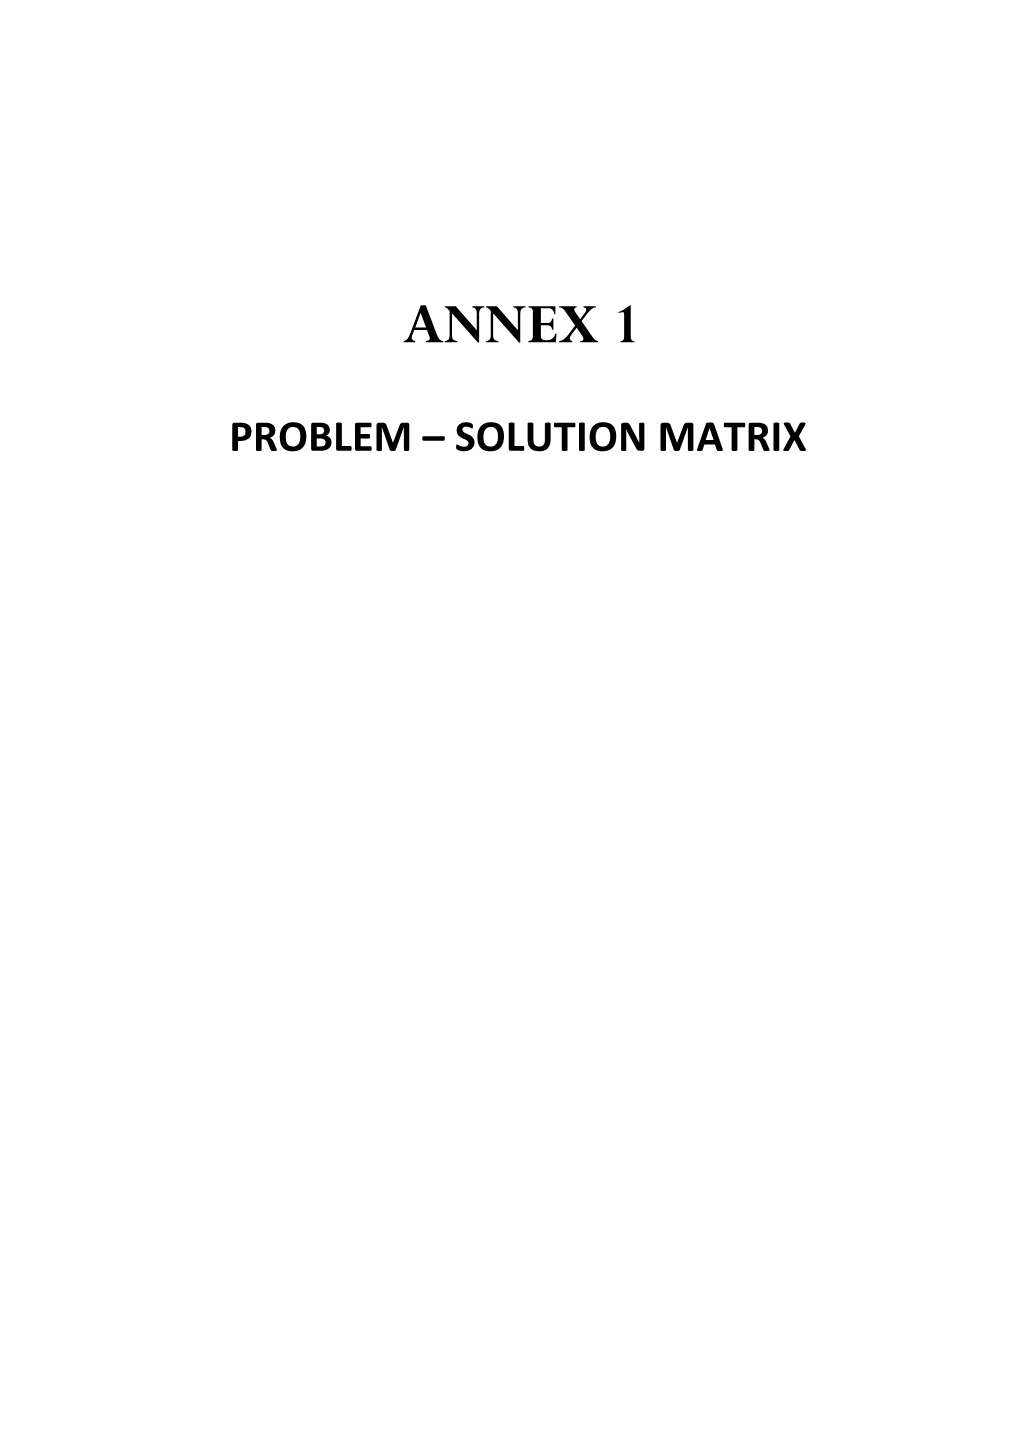 1 – Problem / Solution Matrix